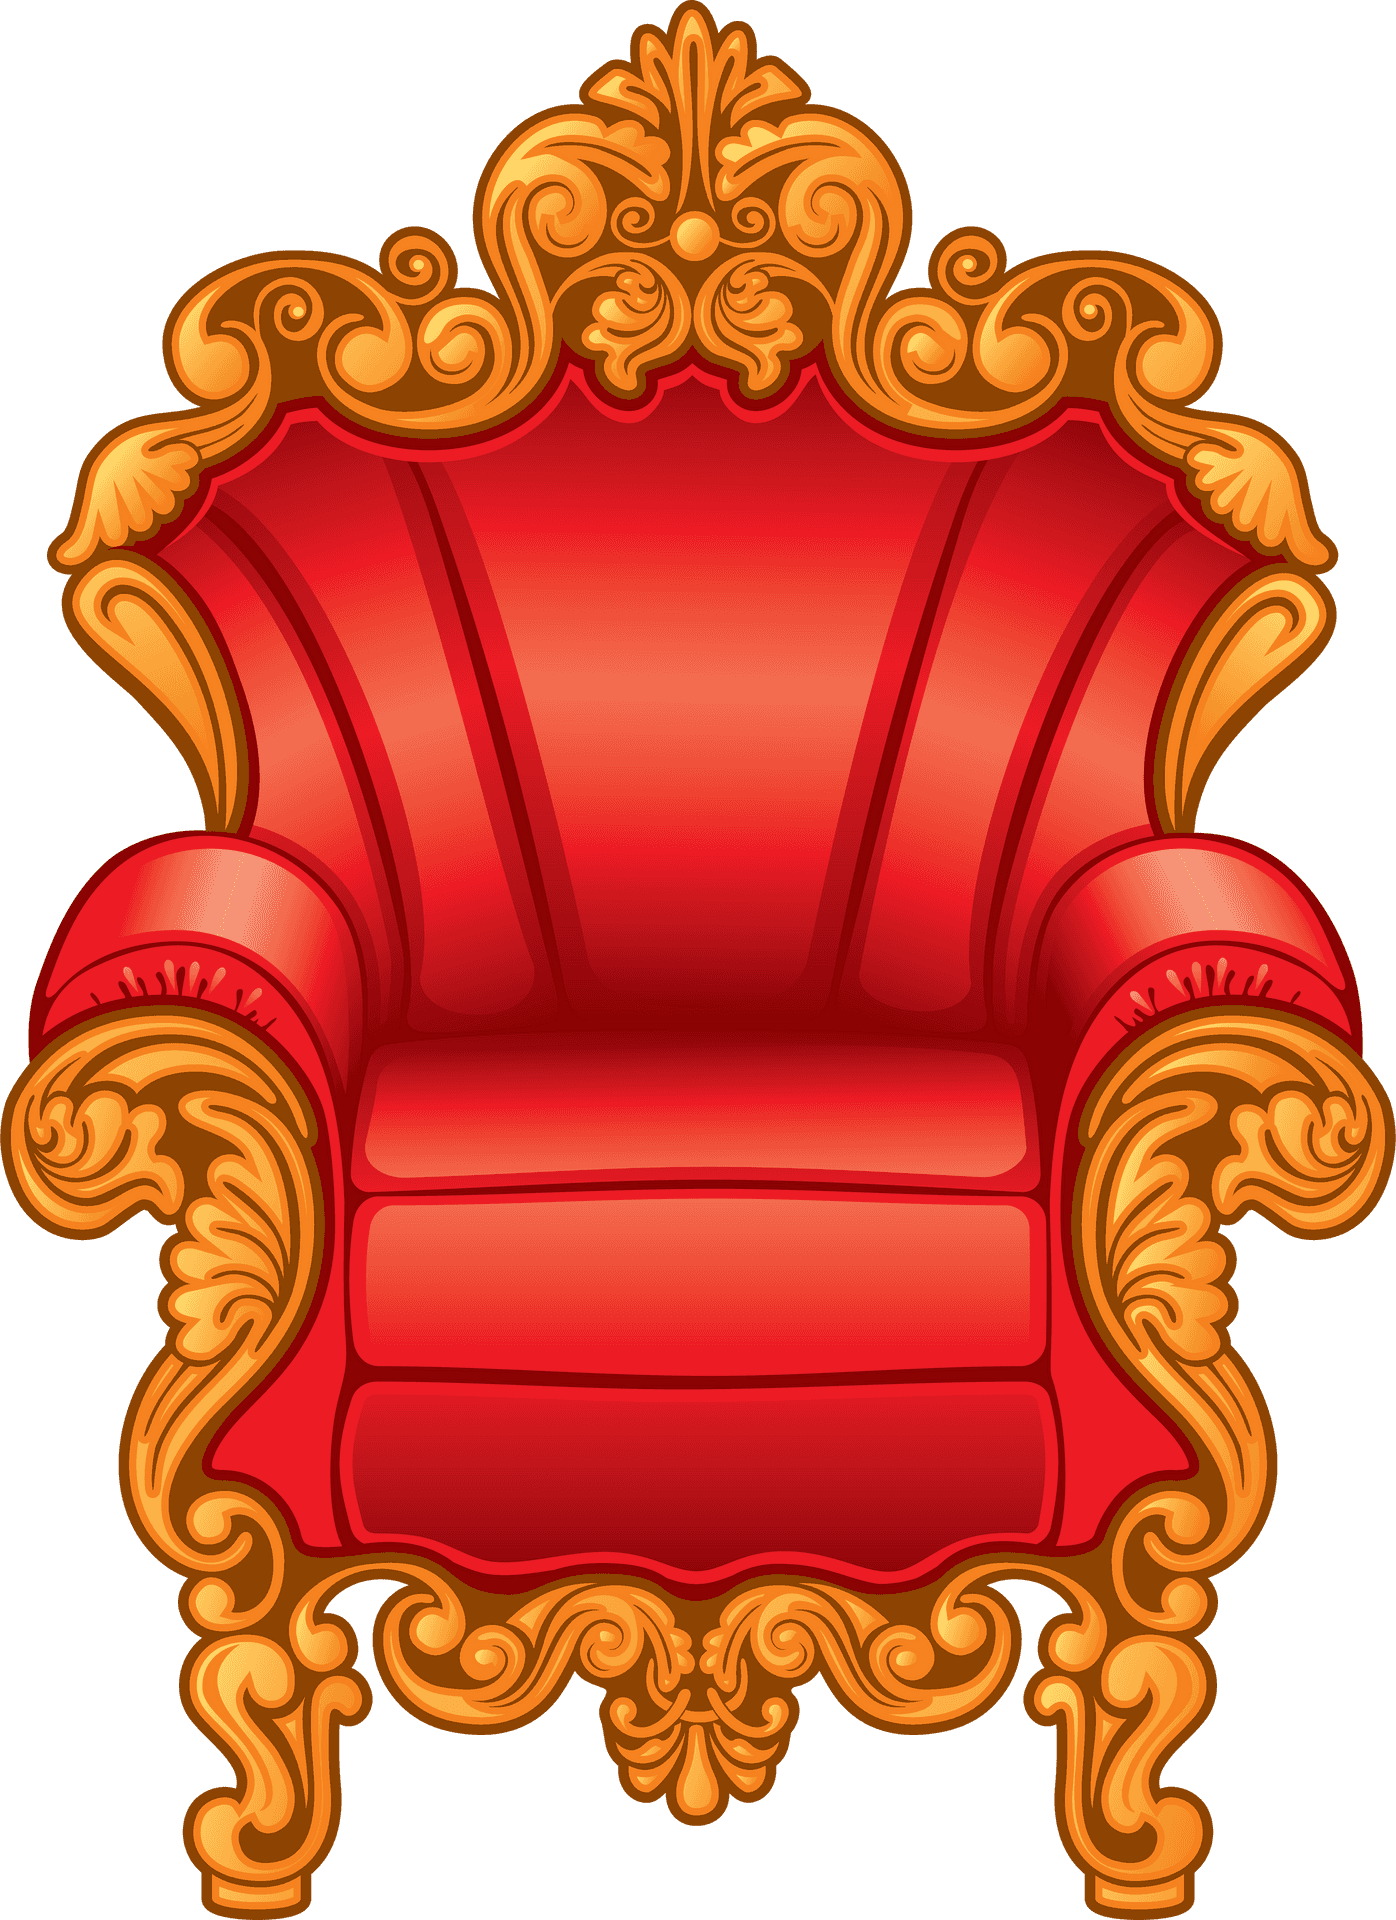 Regal Red Golden Throne Illustration PNG image